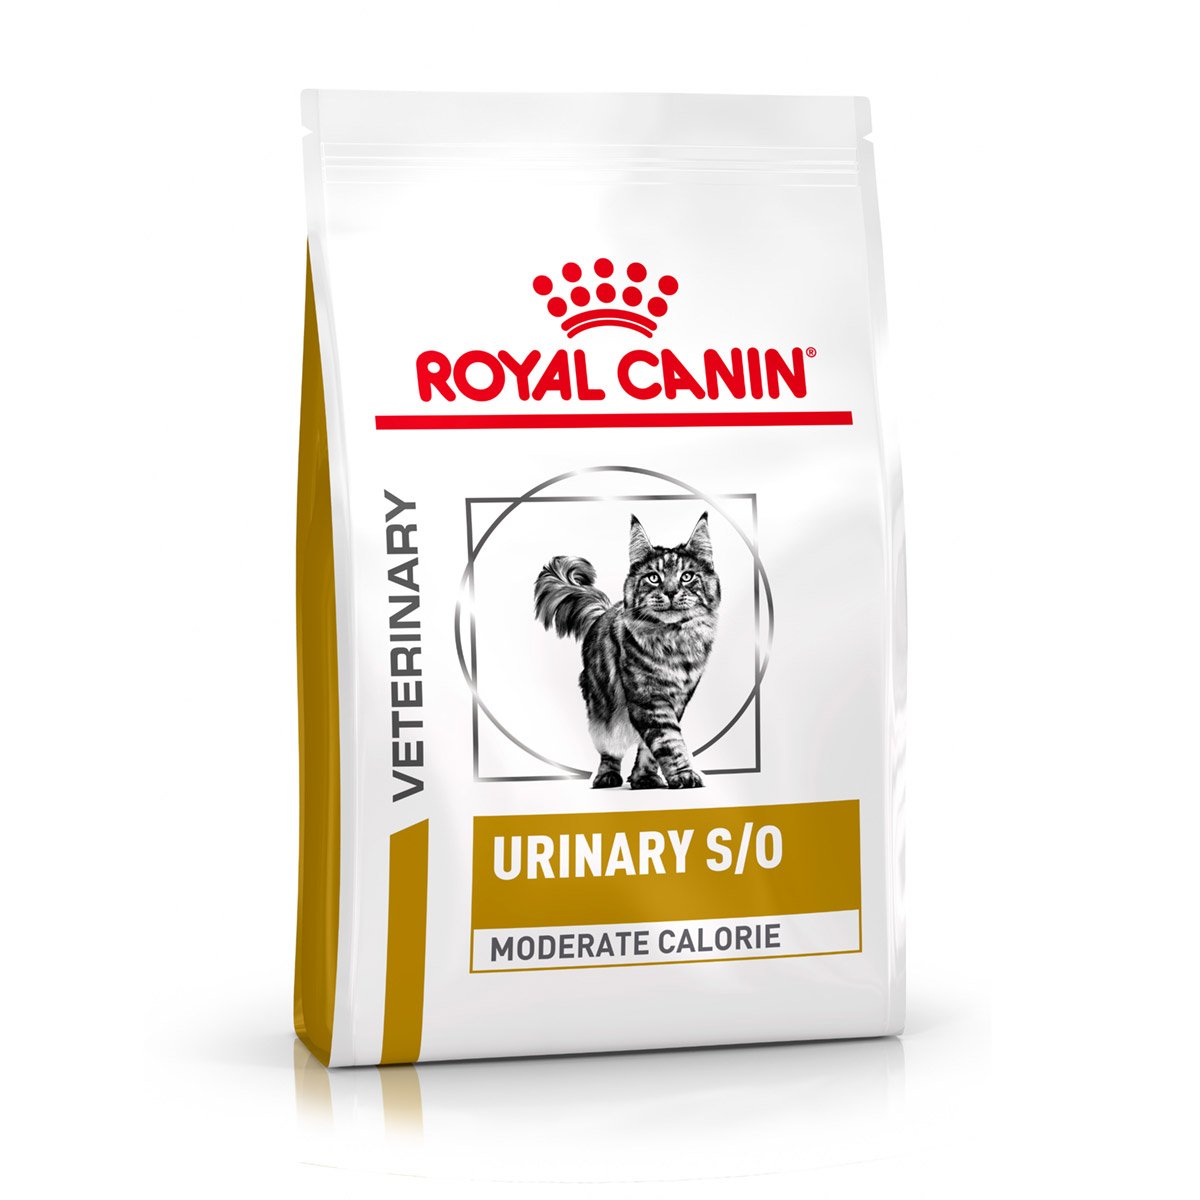 ROYAL CANIN® Veterinary URINARY S/O MODERATE CALORIE Trockenfutter für Katzen 1,5kg von Royal Canin